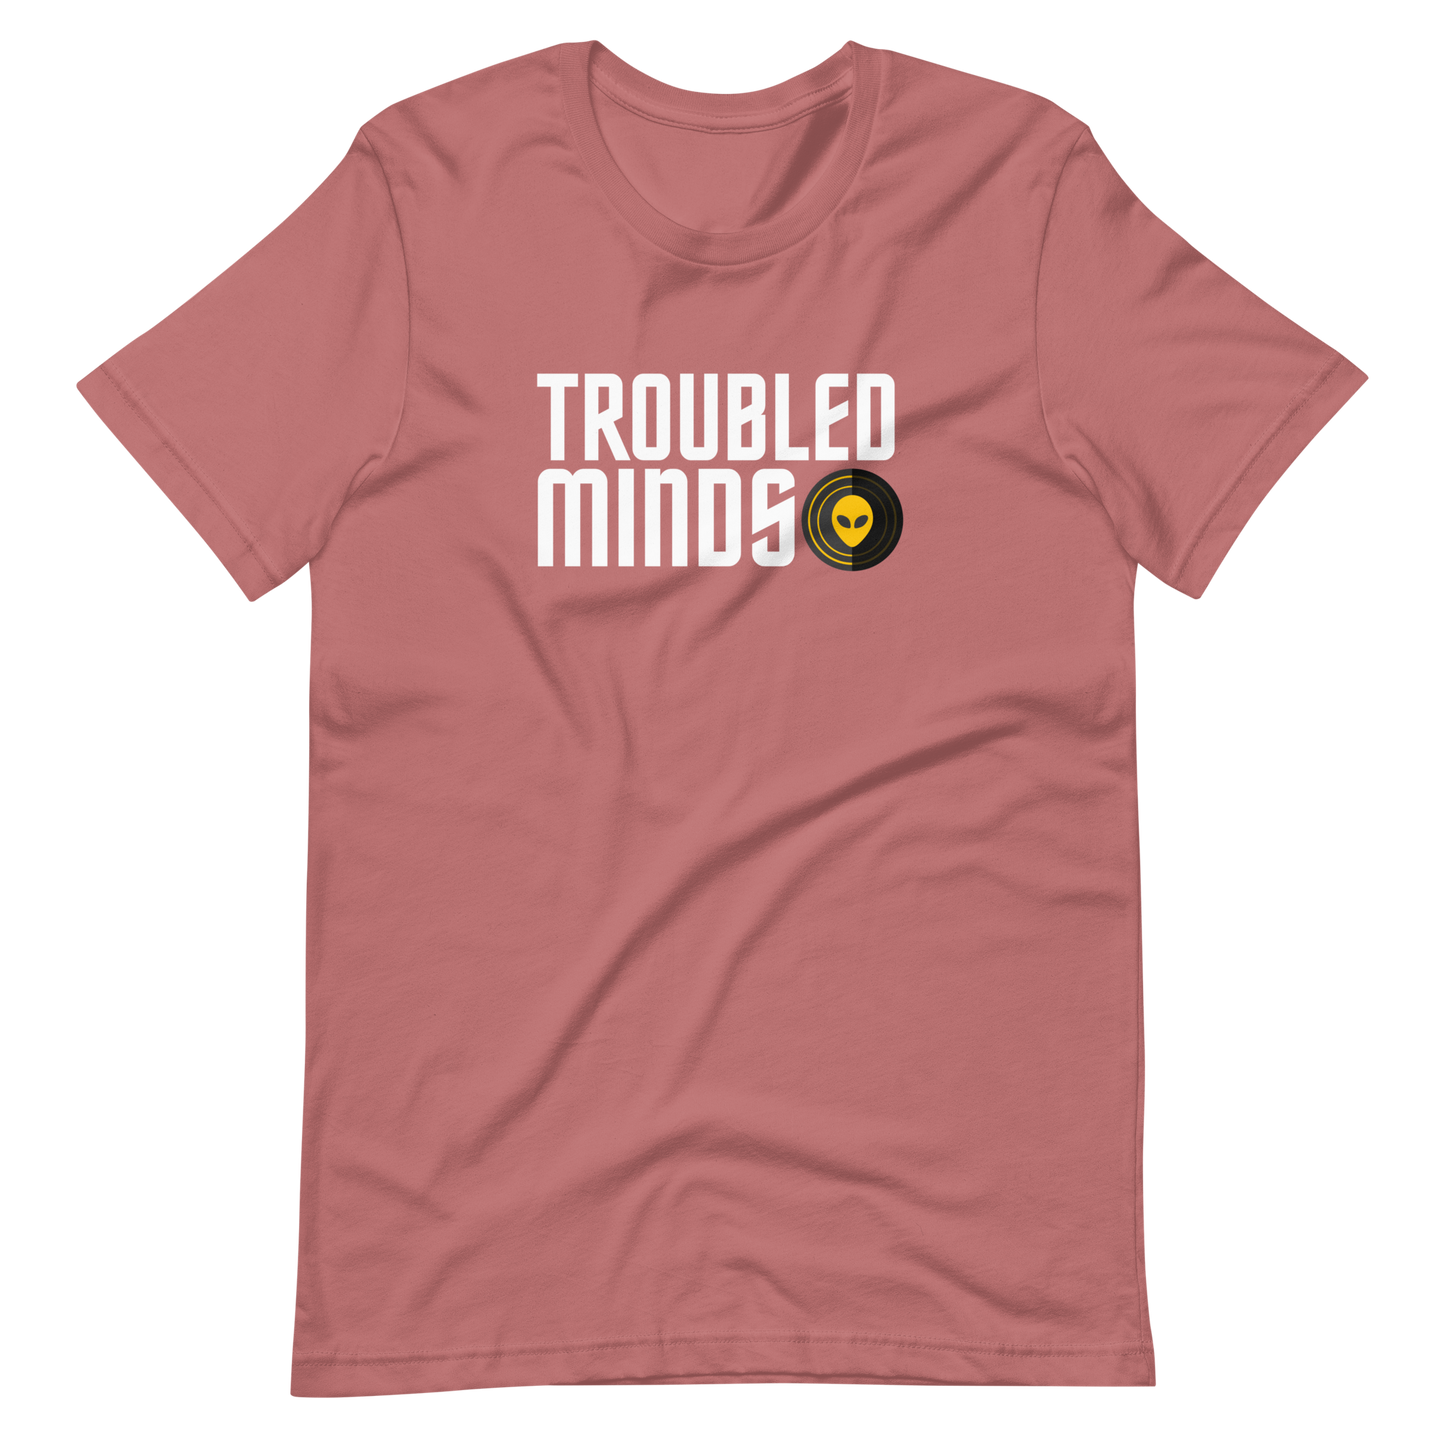 Troubled Minds T-Shirt - (WHT/YLW Logo)